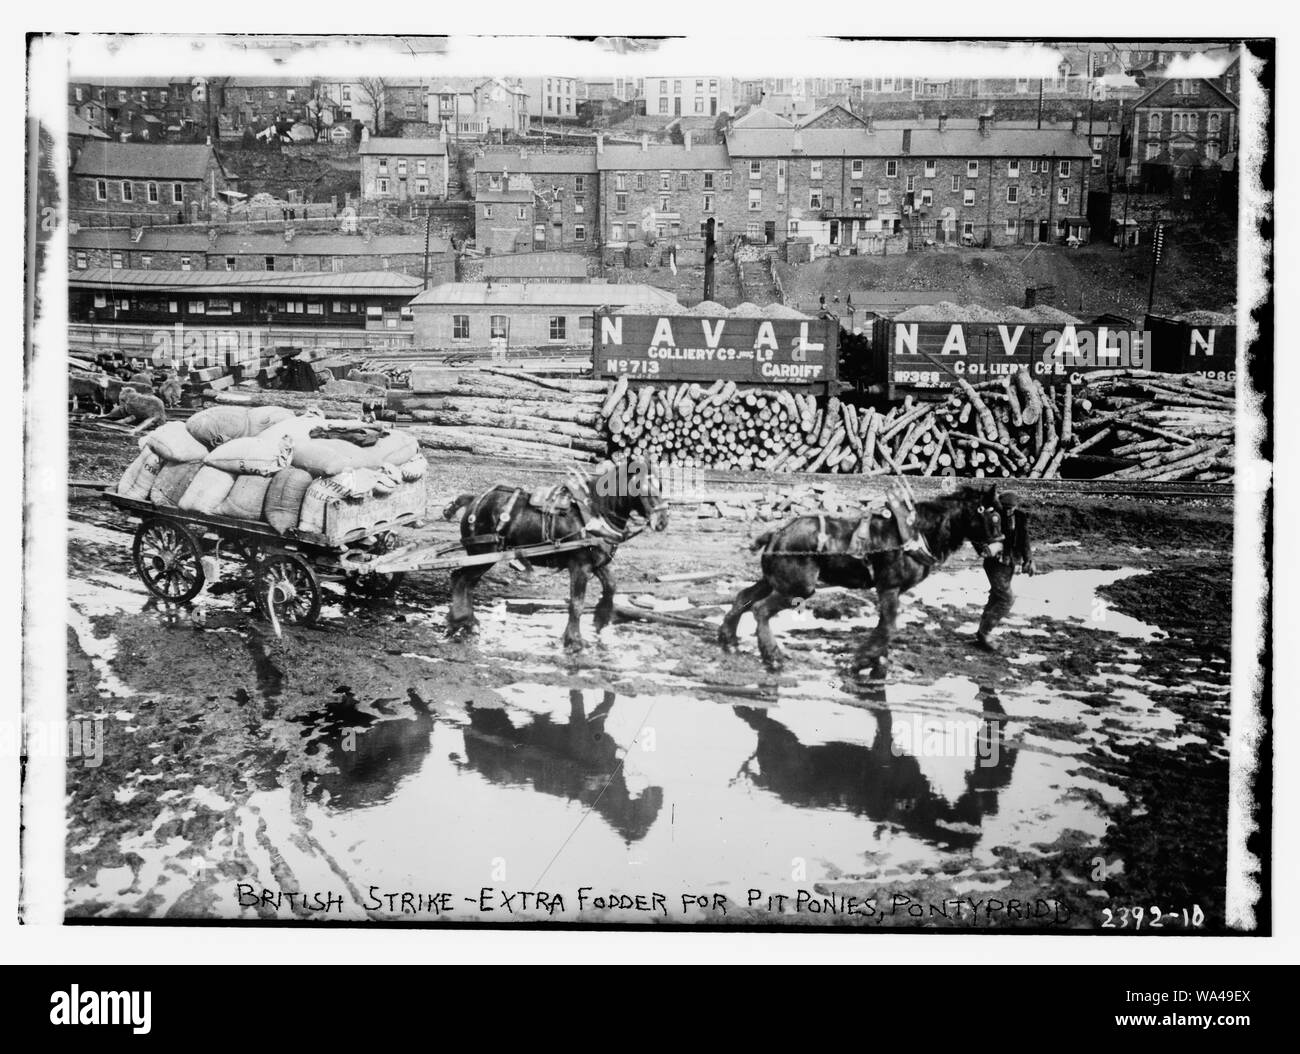 British strike - extra fodder for pit ponies, Pontypridd [i.e. Tonypandy & Trealaw railway station, Trealaw] Stock Photo